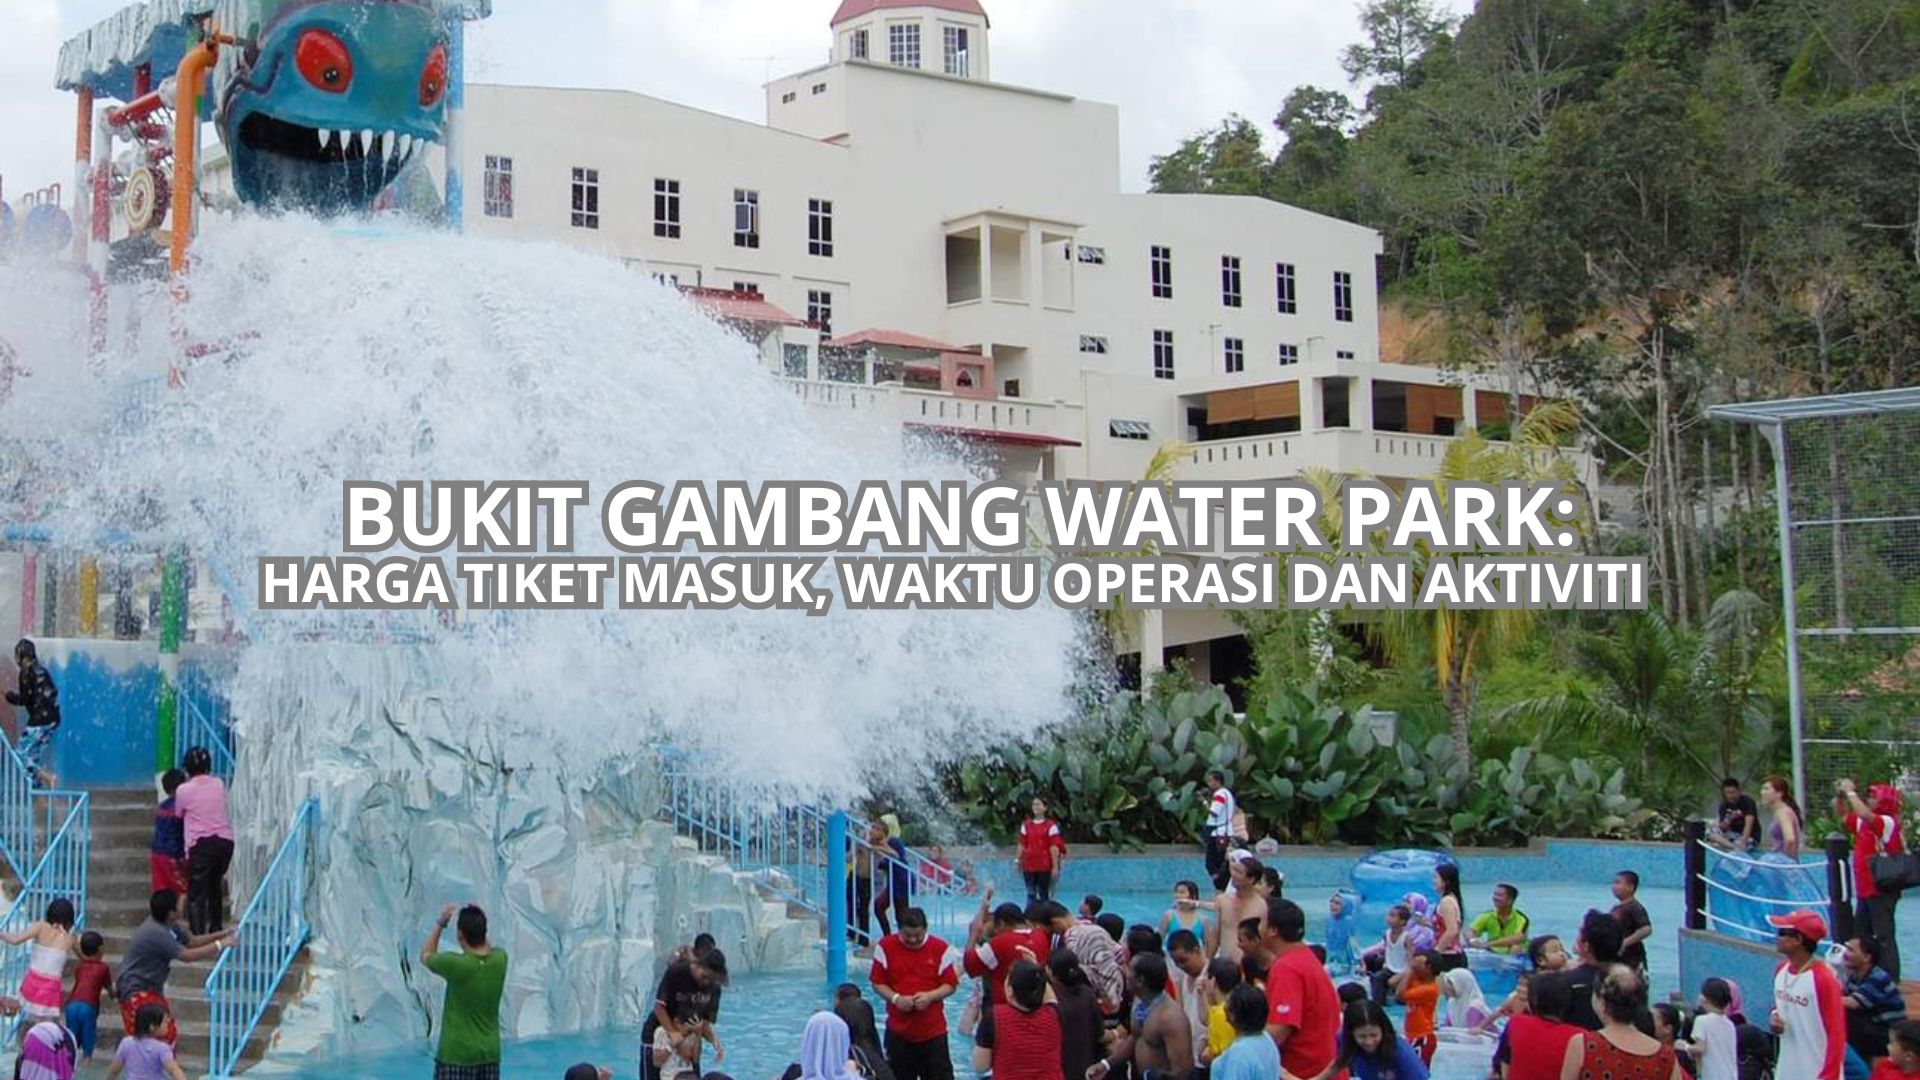 Bukit Gambang Water Park Cover